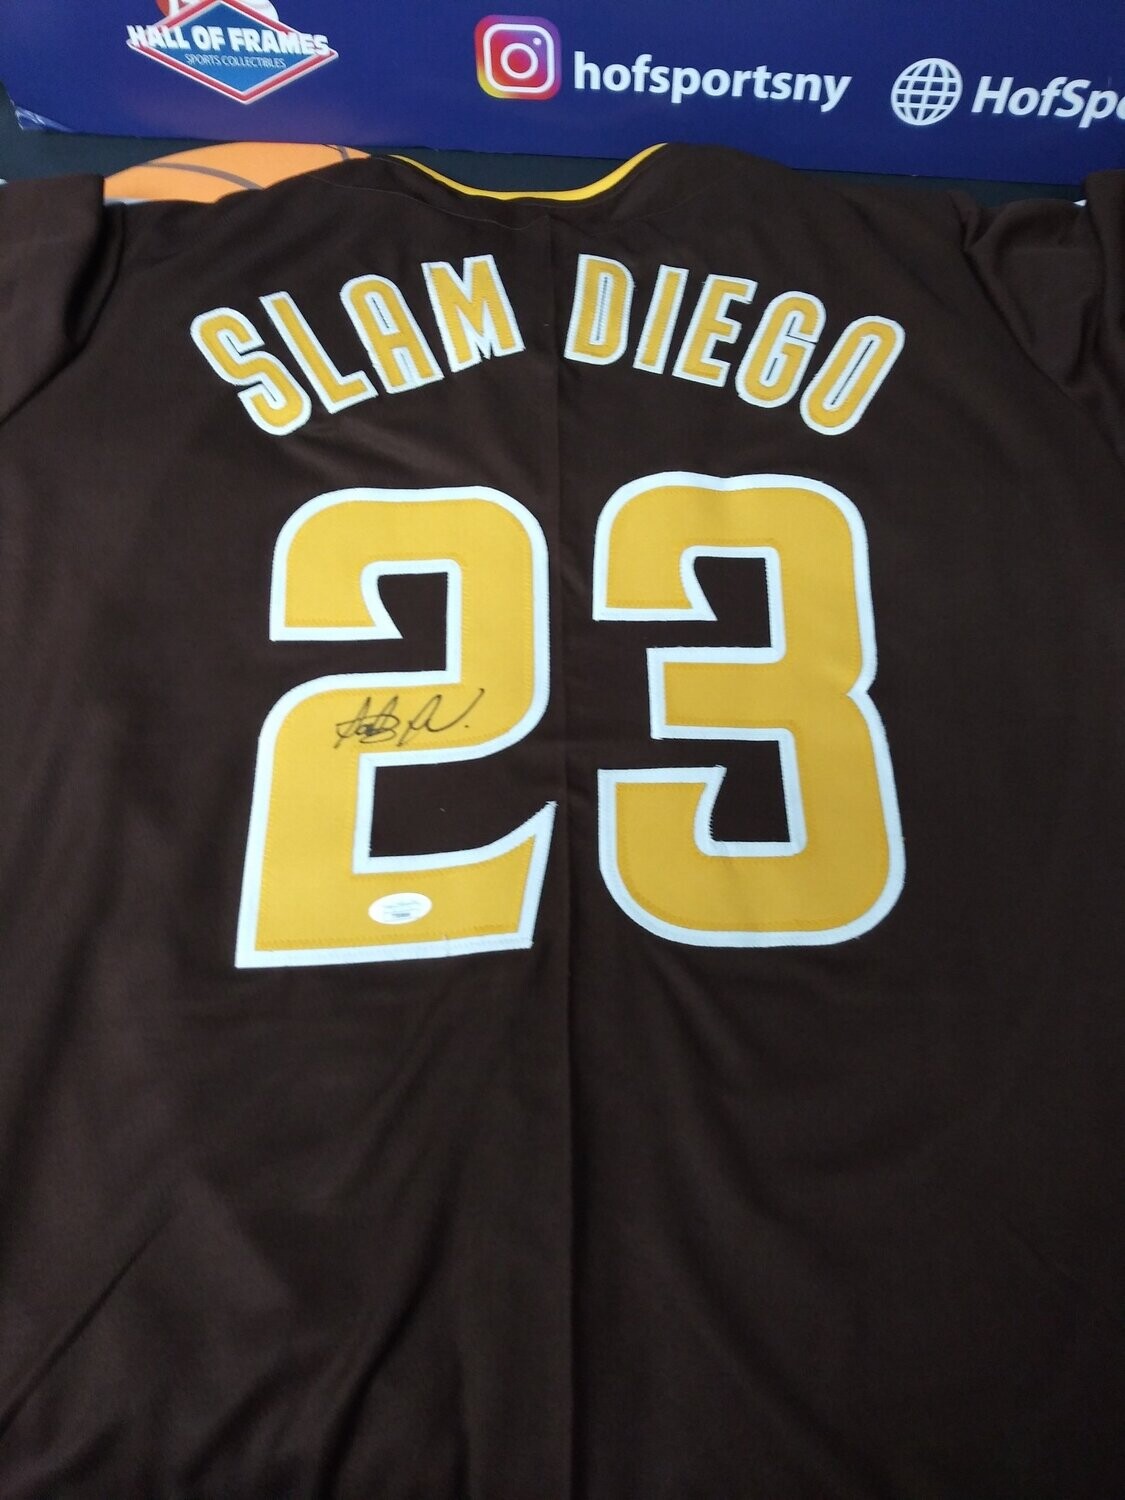 Fernando Tatis Jr. Signed Custom Brown Slam Diego Baseball Jersey